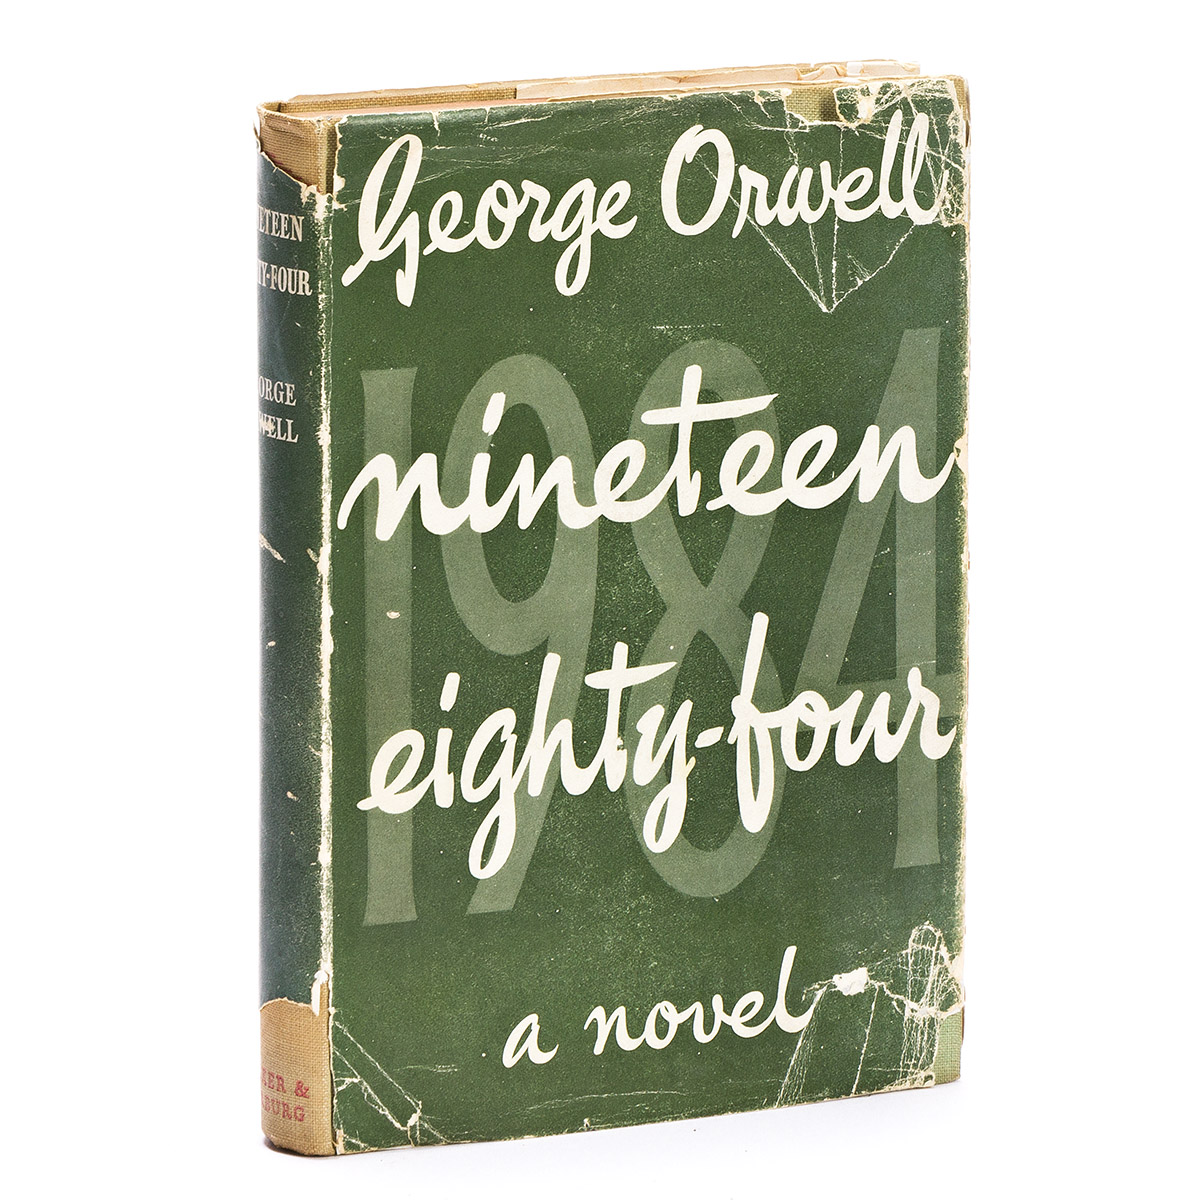 ORWELL, GEORGE. Nineteen Eighty-Four.